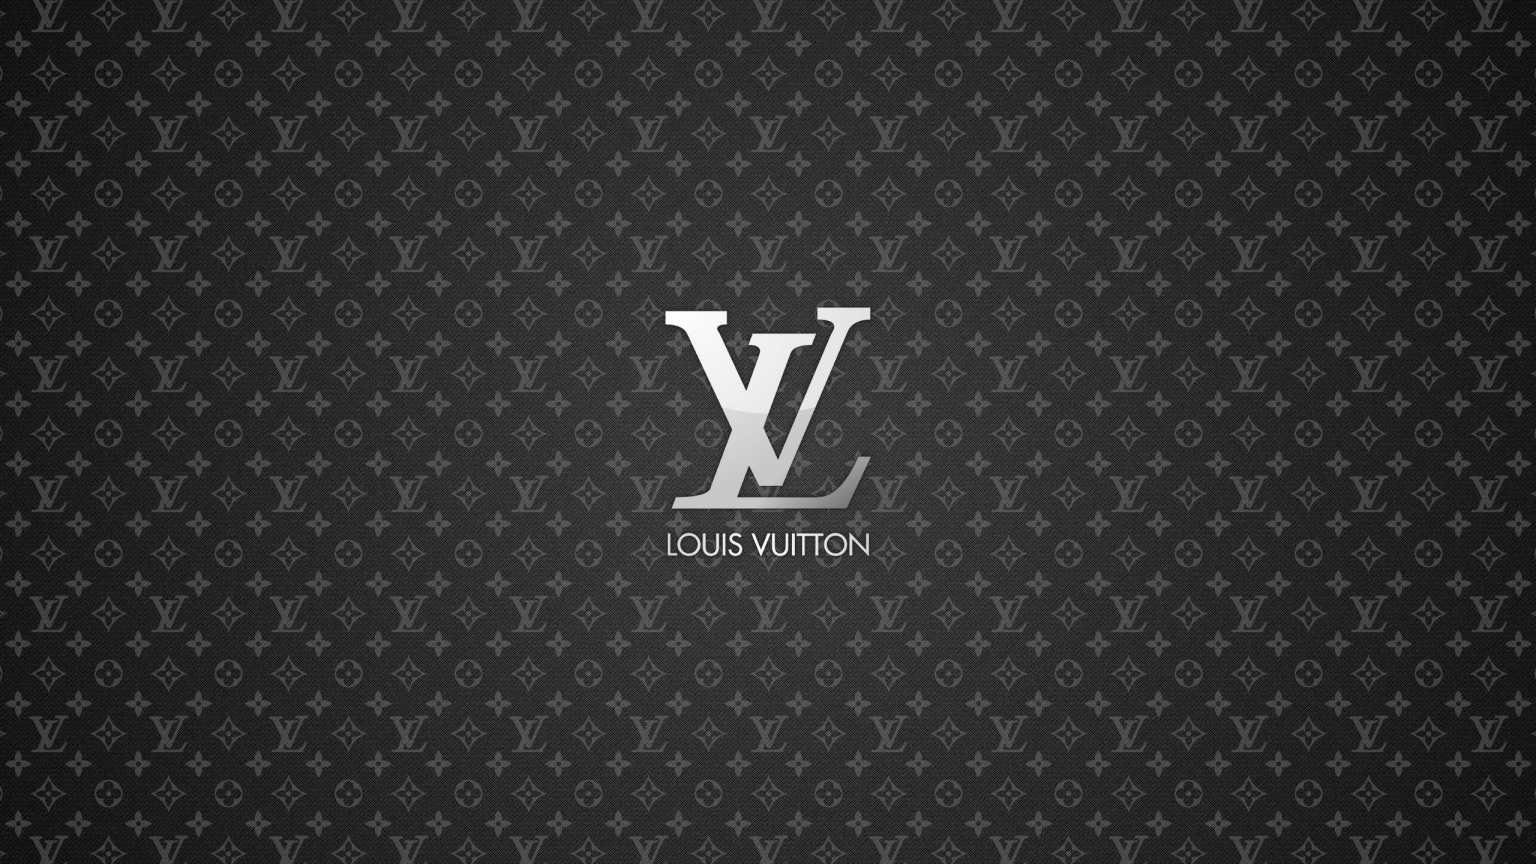 Louis Vuitton for 1536 x 864 HDTV resolution